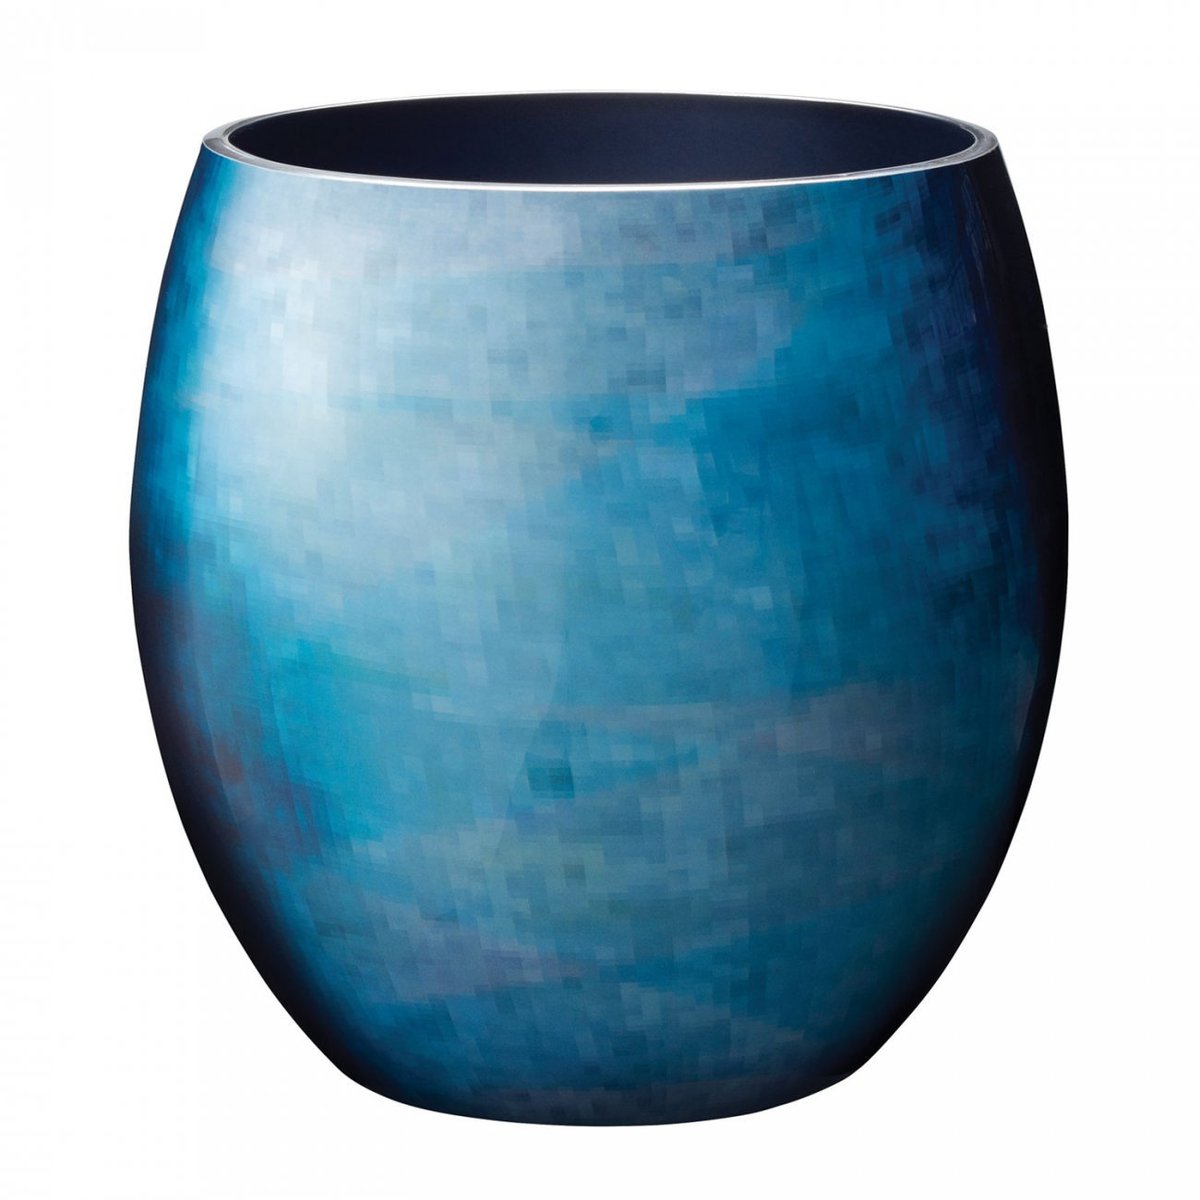 Stelton Stelton – Stockholm Horizon vase Ø 20,3 cm